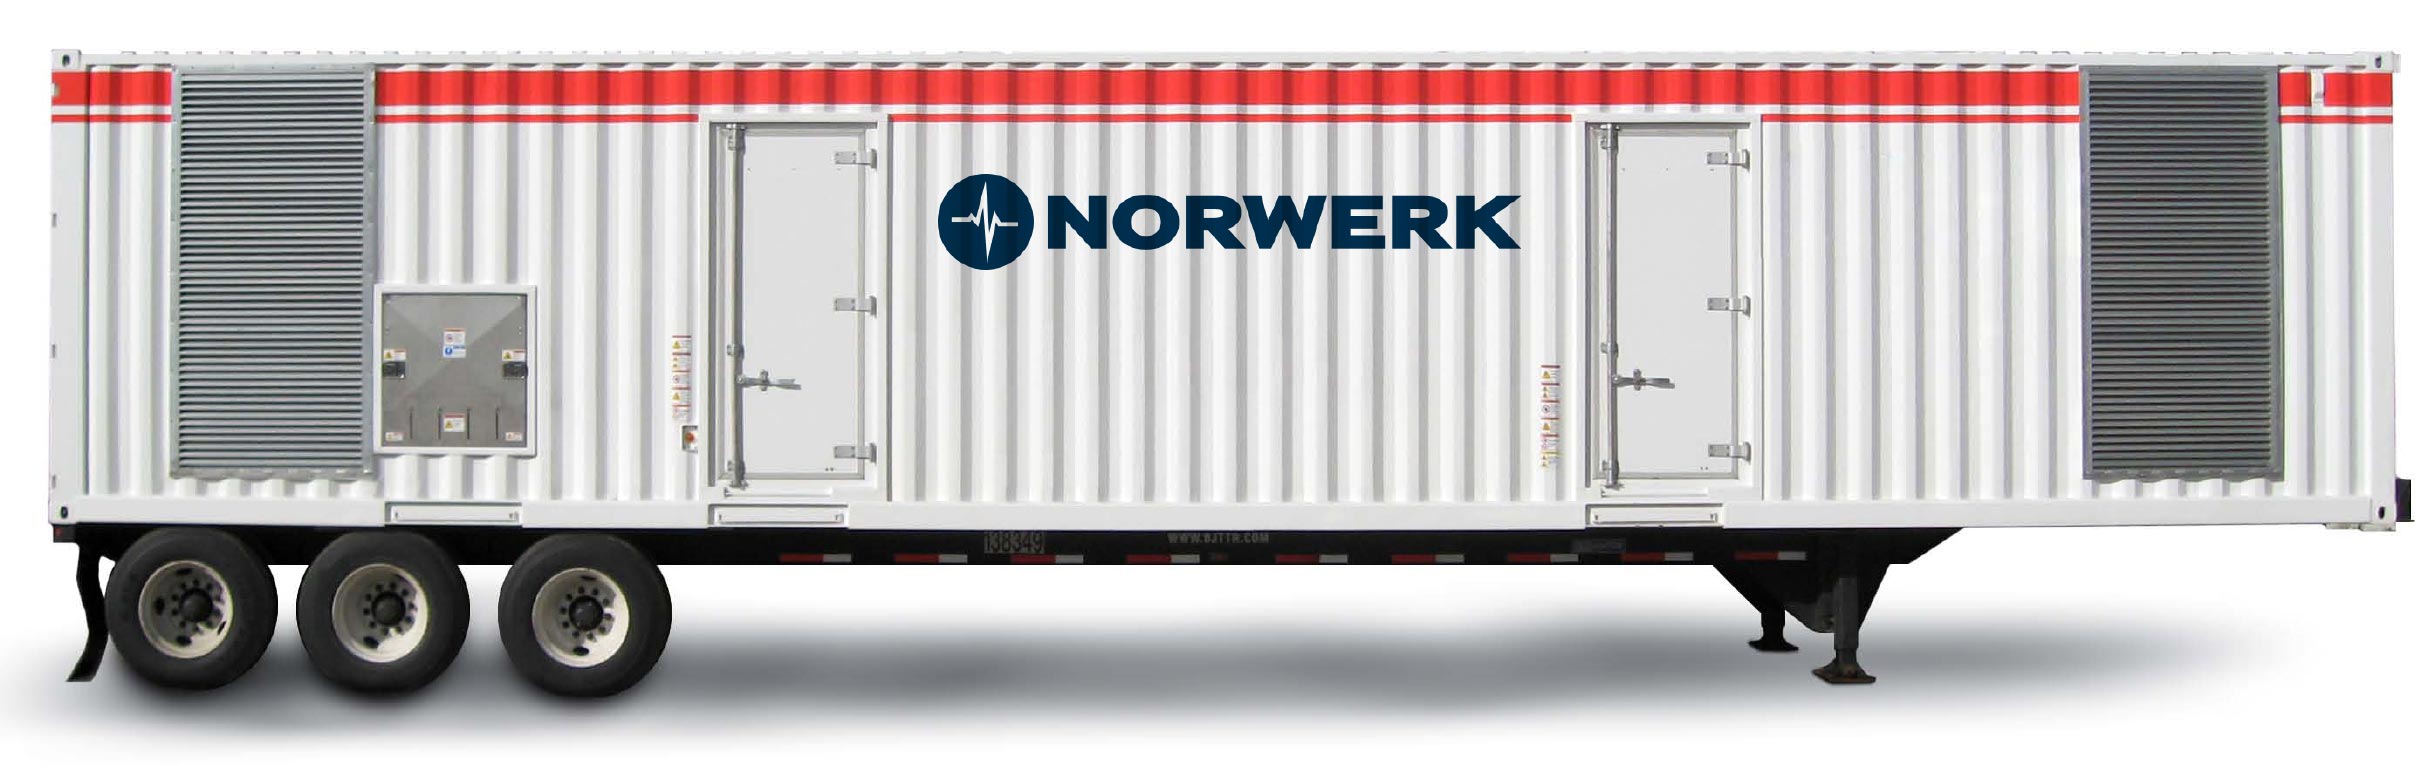 norwerk-trailer